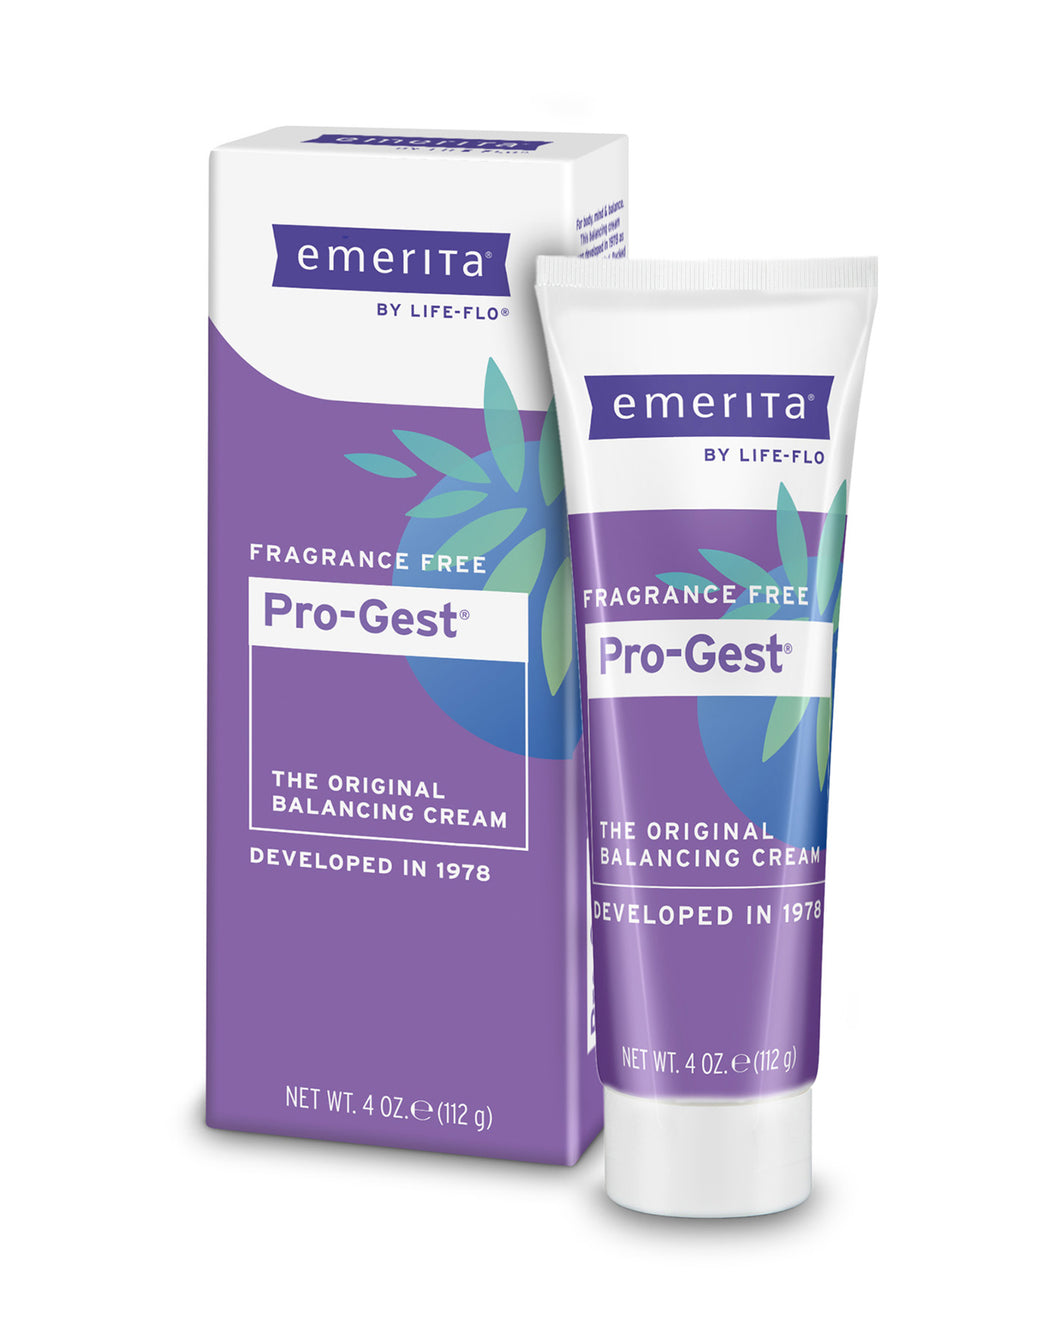 Progesta-Care Body Cream is now Pro-Gest Balancing Cream